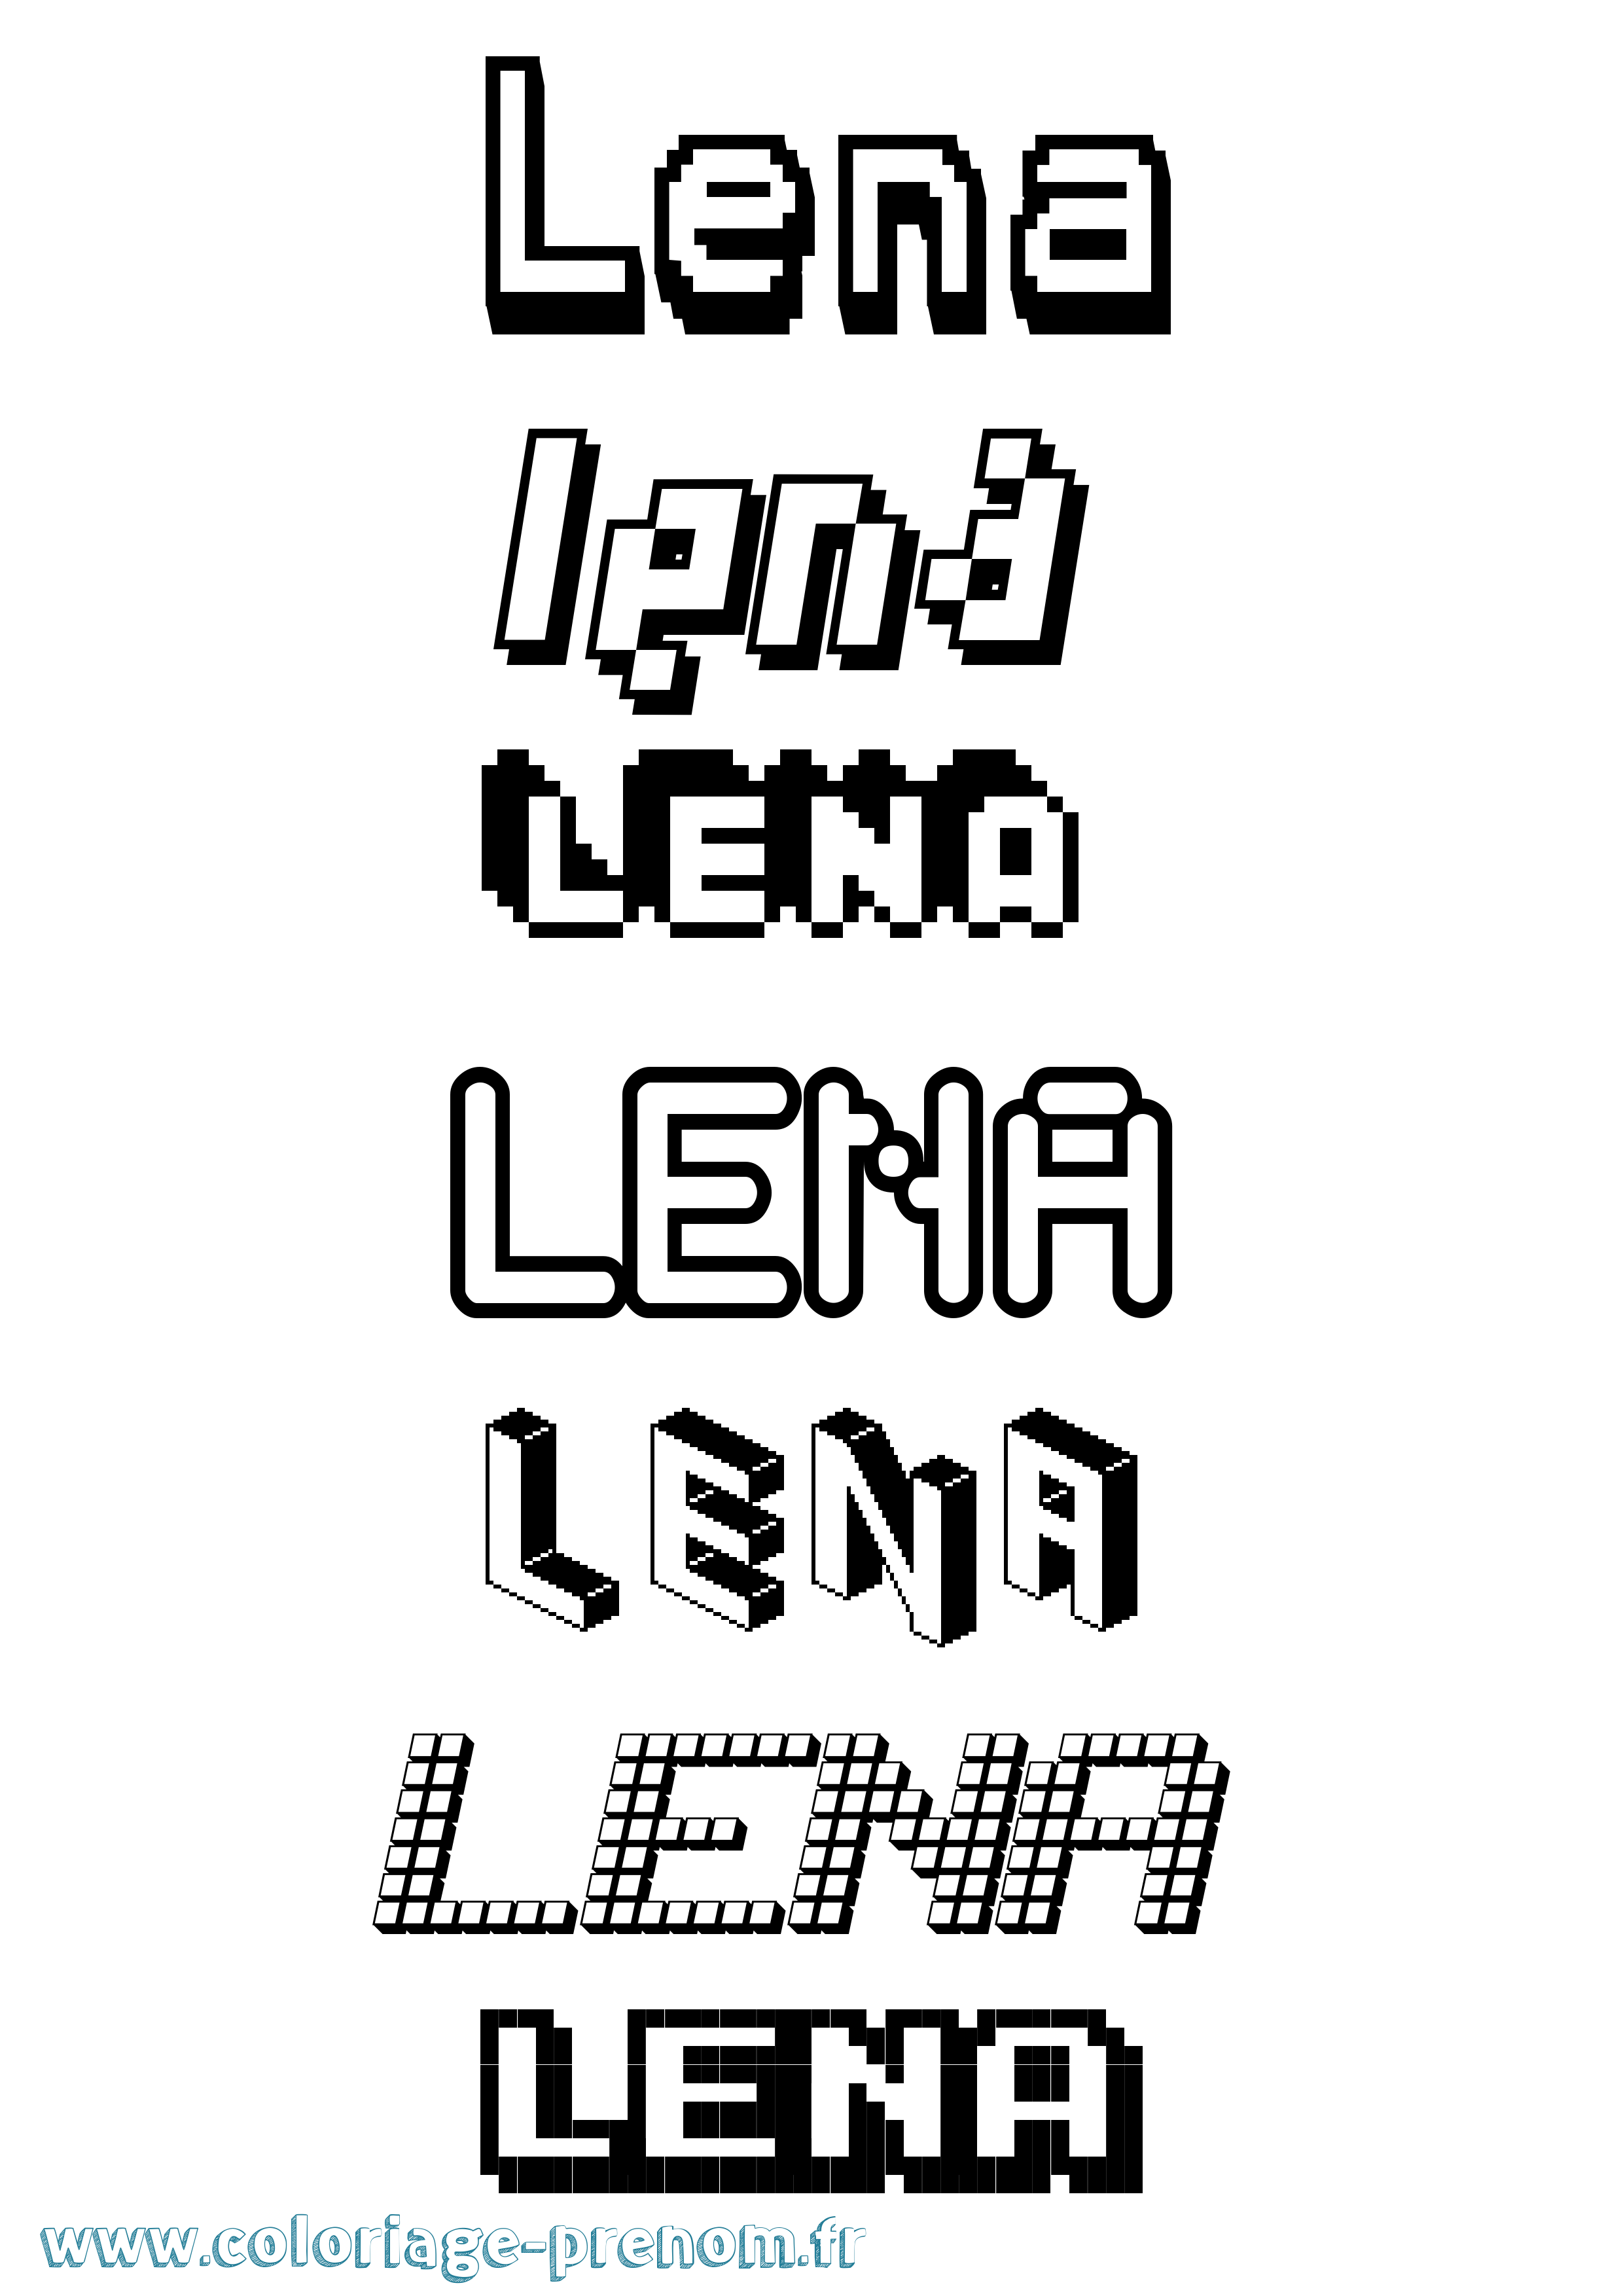 Coloriage prénom Lena Pixel